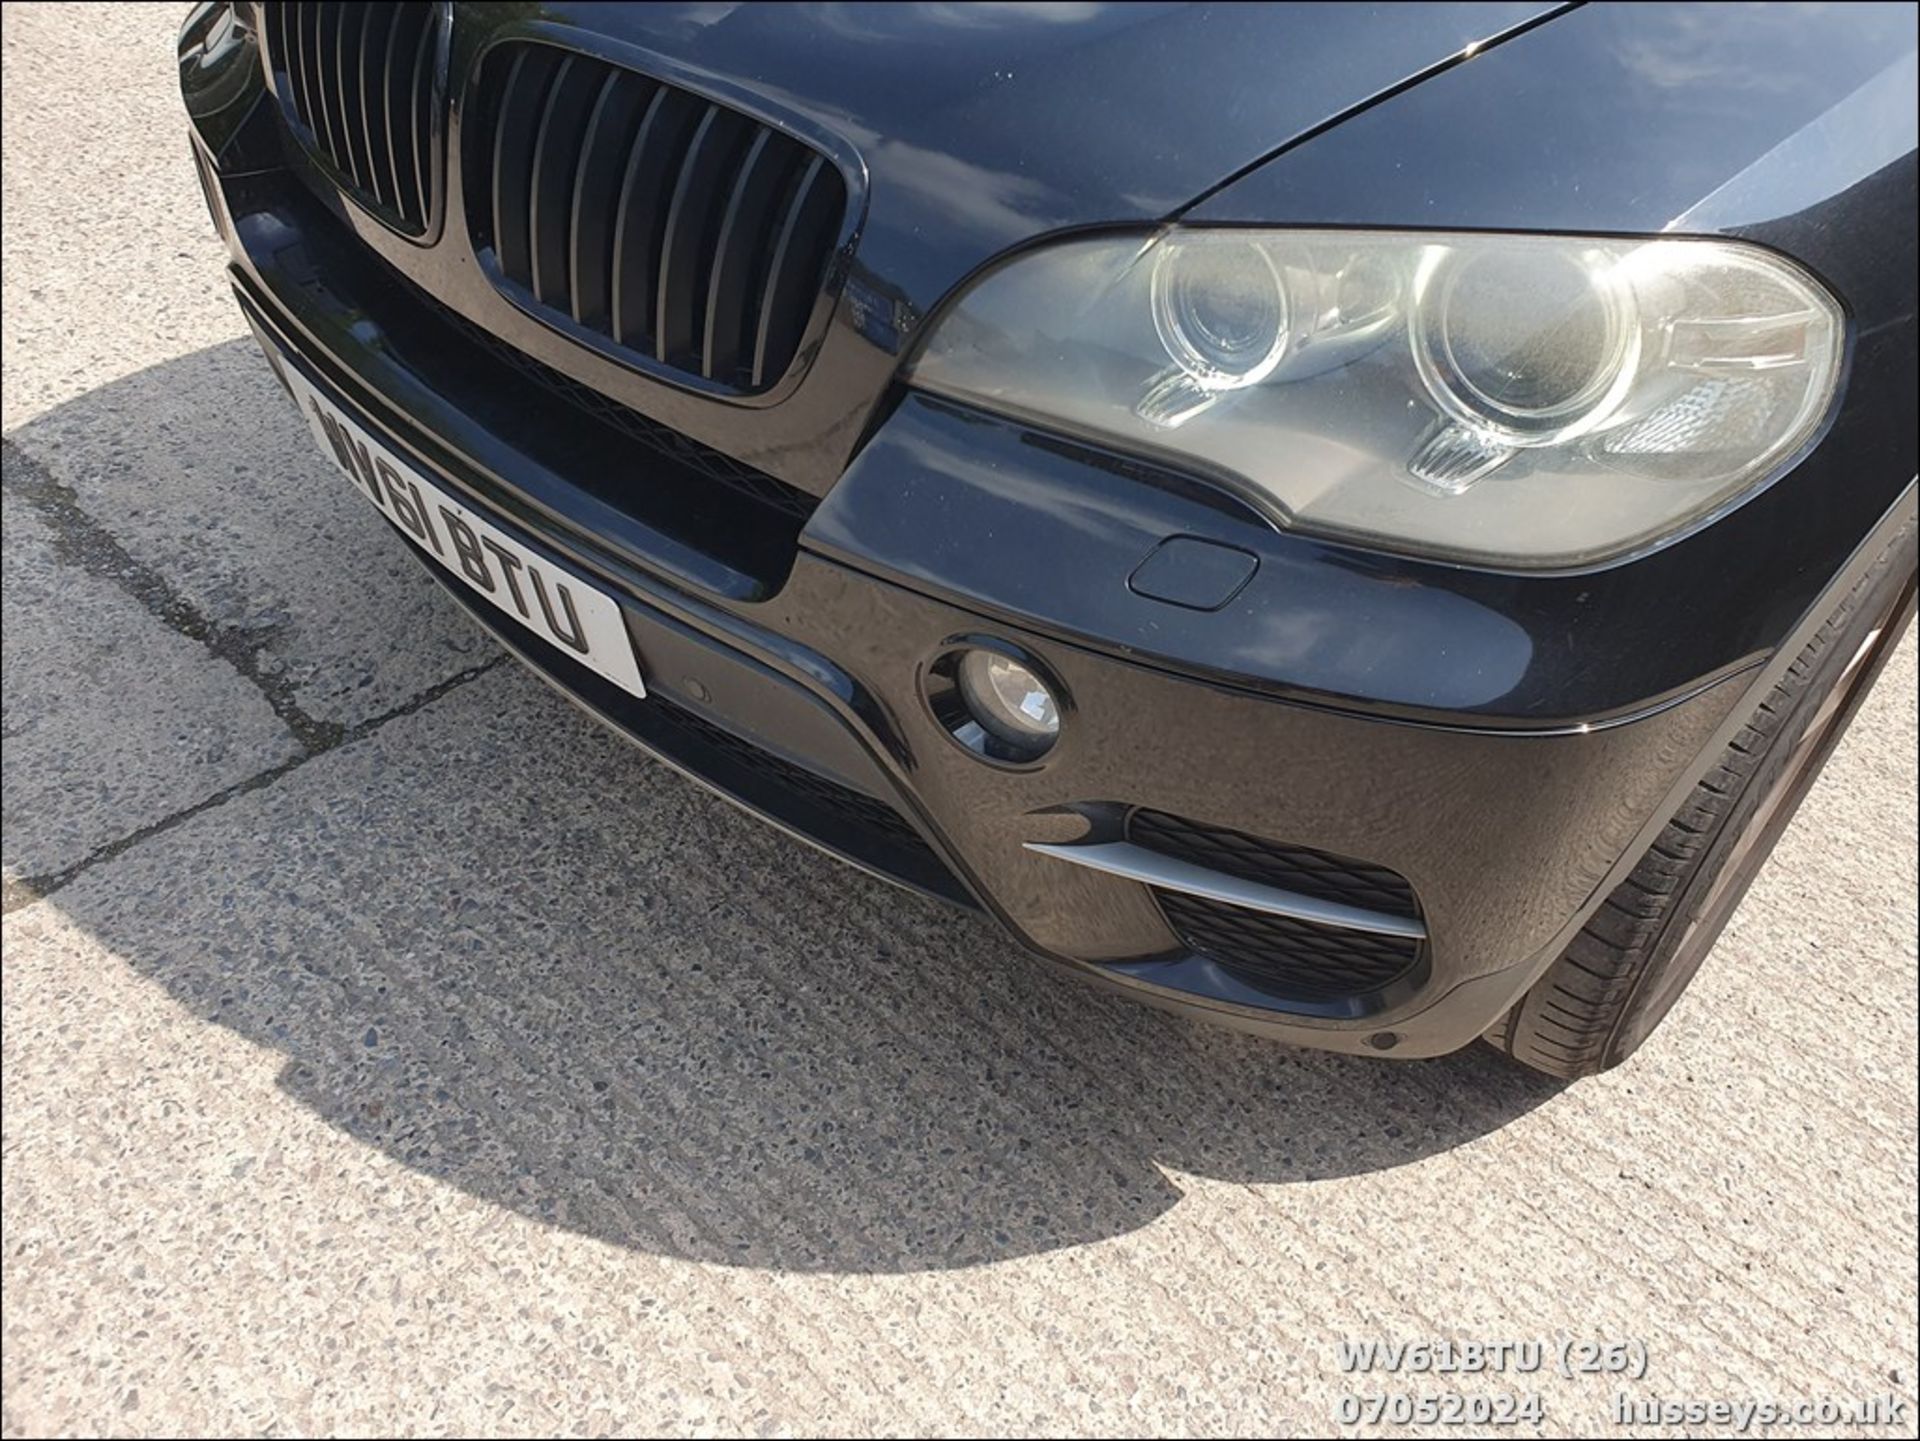 11/61 BMW X5 XDRIVE30D SE AUTO - 2993cc 5dr Estate (Black, 86k) - Image 27 of 41